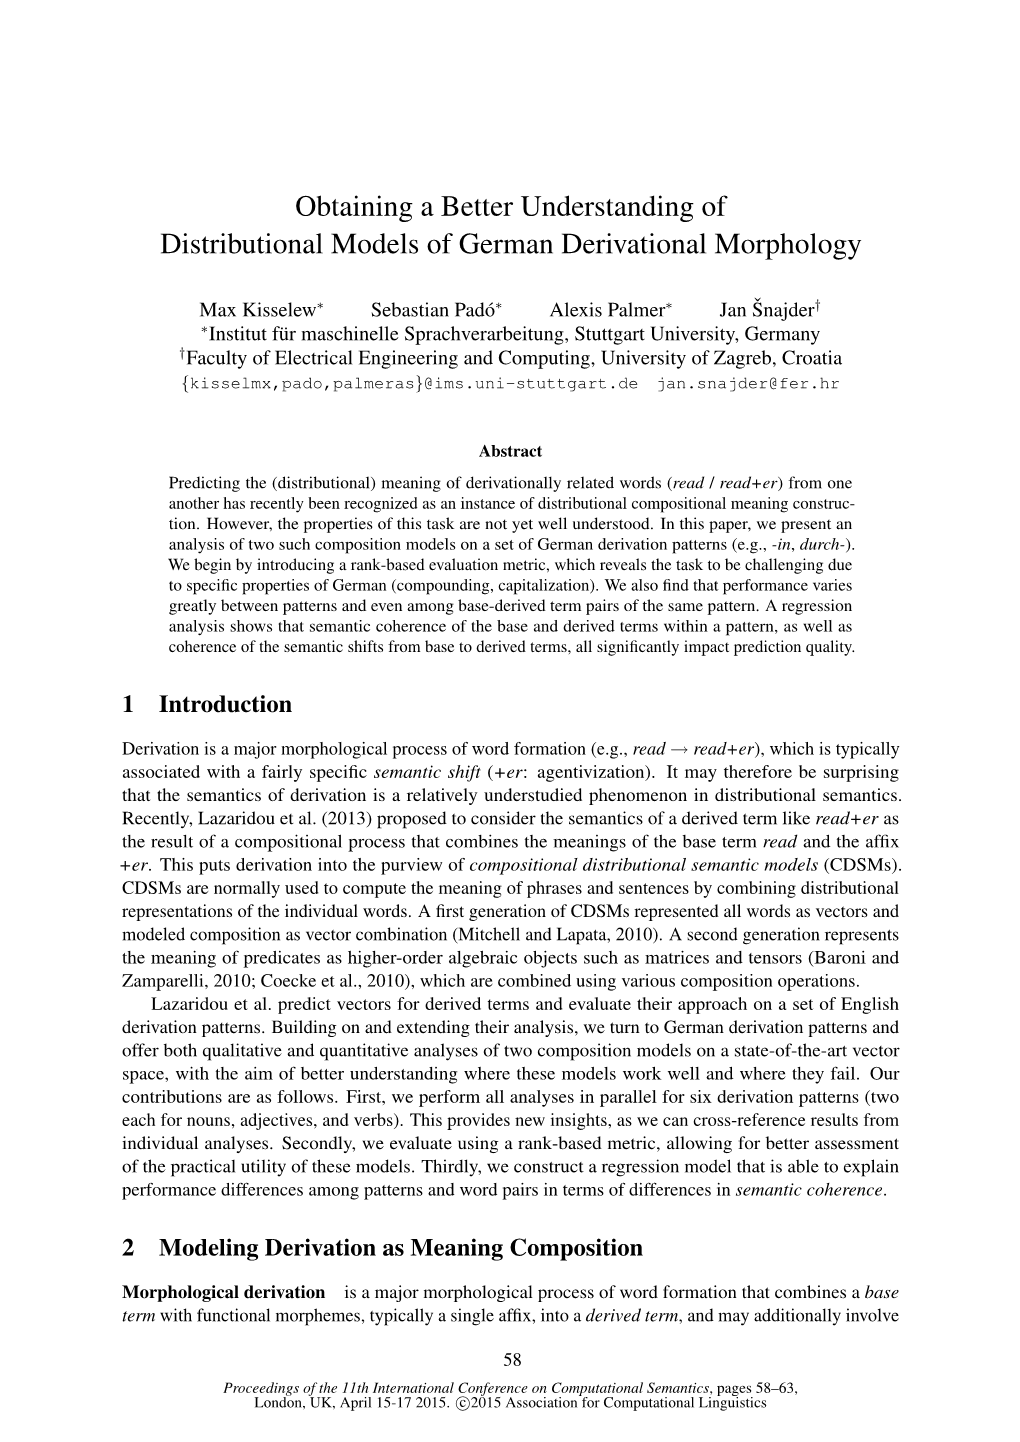 Obtaining a Better Understanding of Distributional Models of German Derivational Morphology